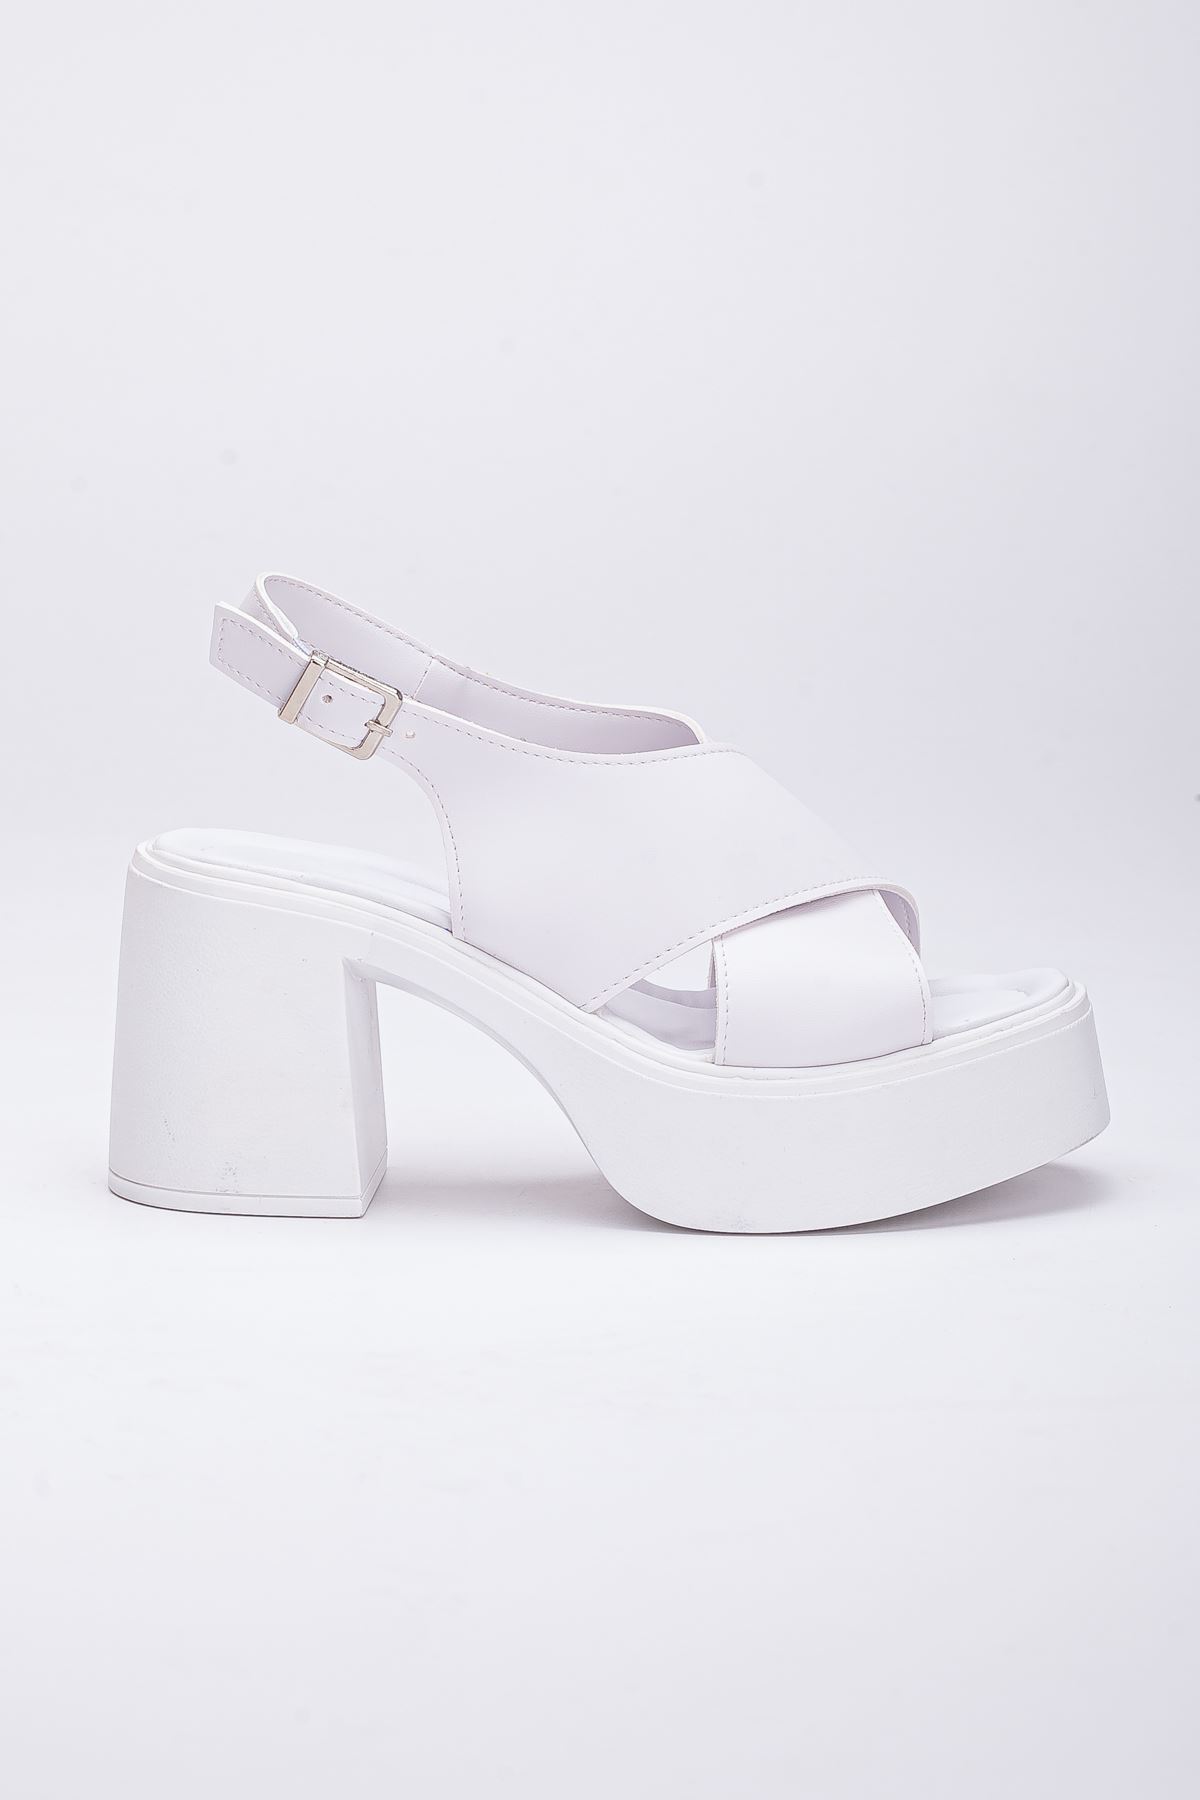 Kadın Topuklu Platform Sandalet Beyaz Cilt